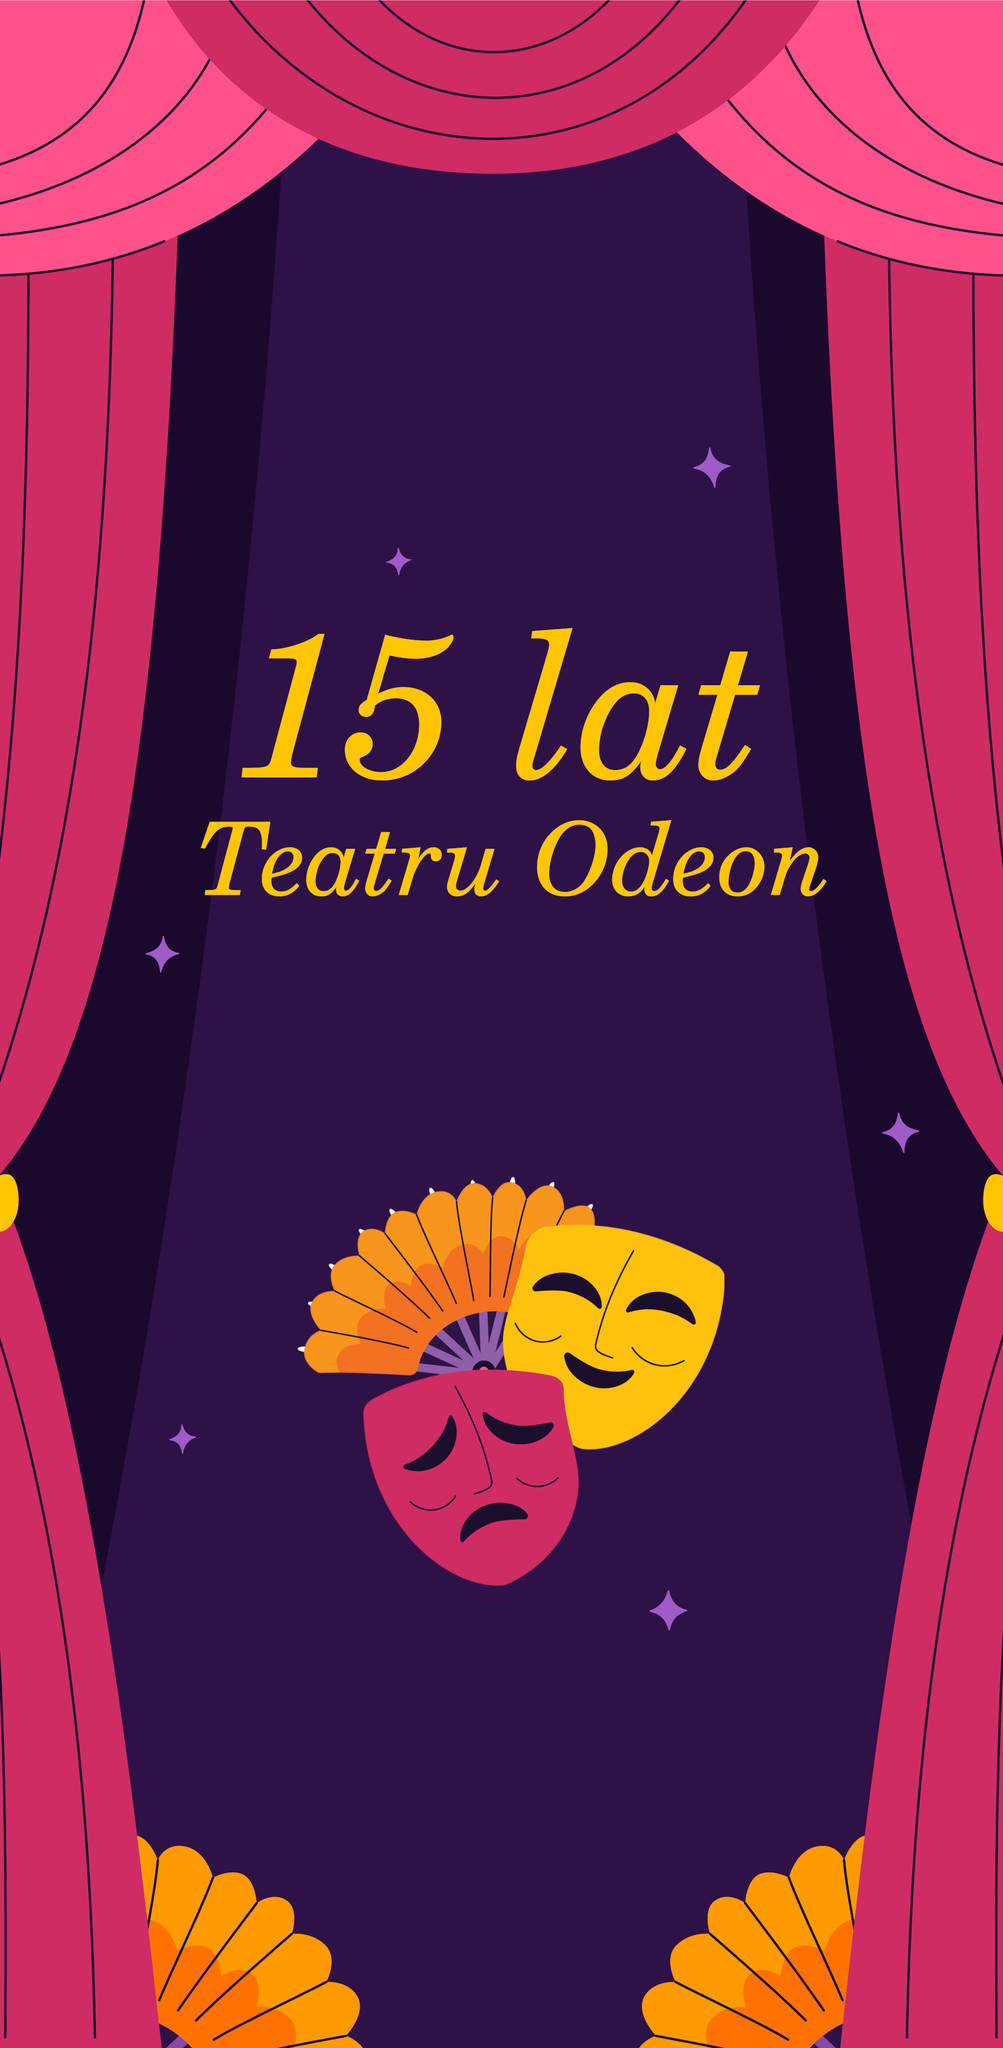 fot. Teatr Odeon